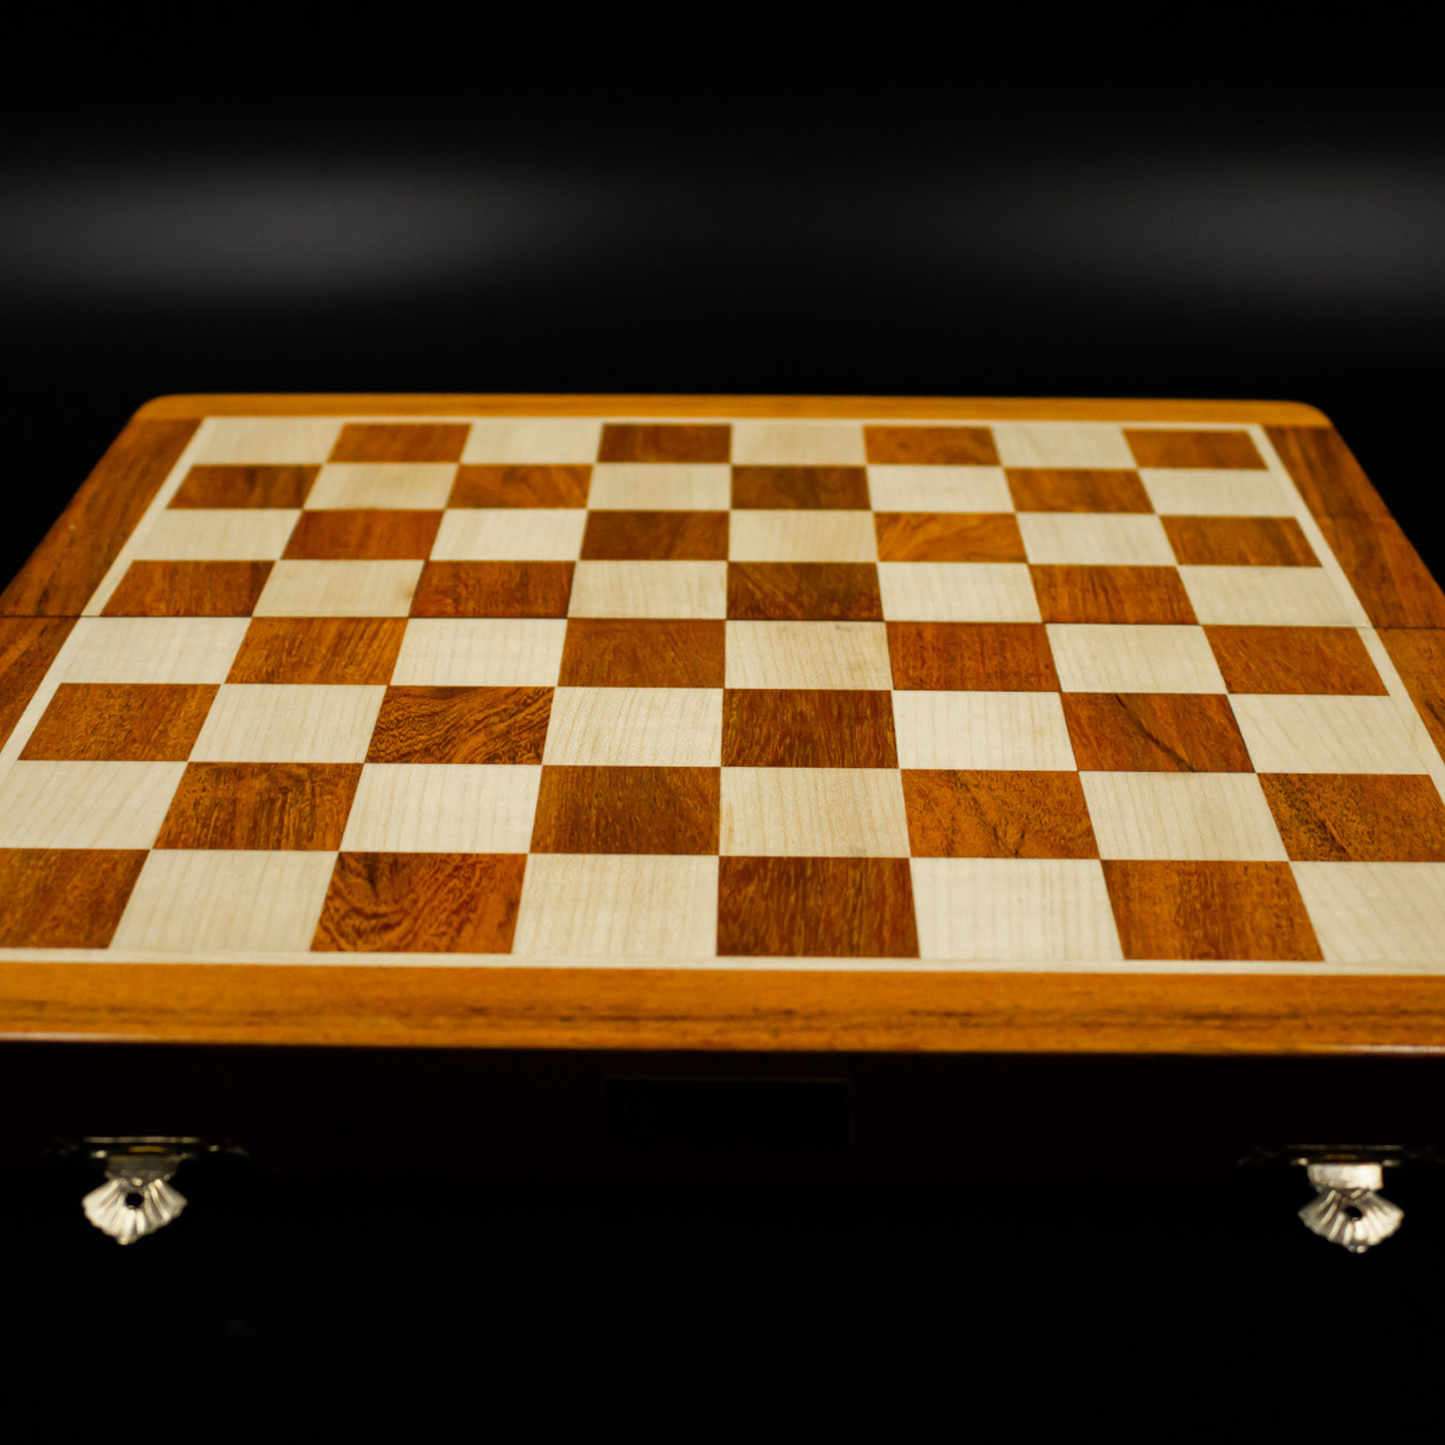 The Ruy Lopez - Large Chess Set (30cm)